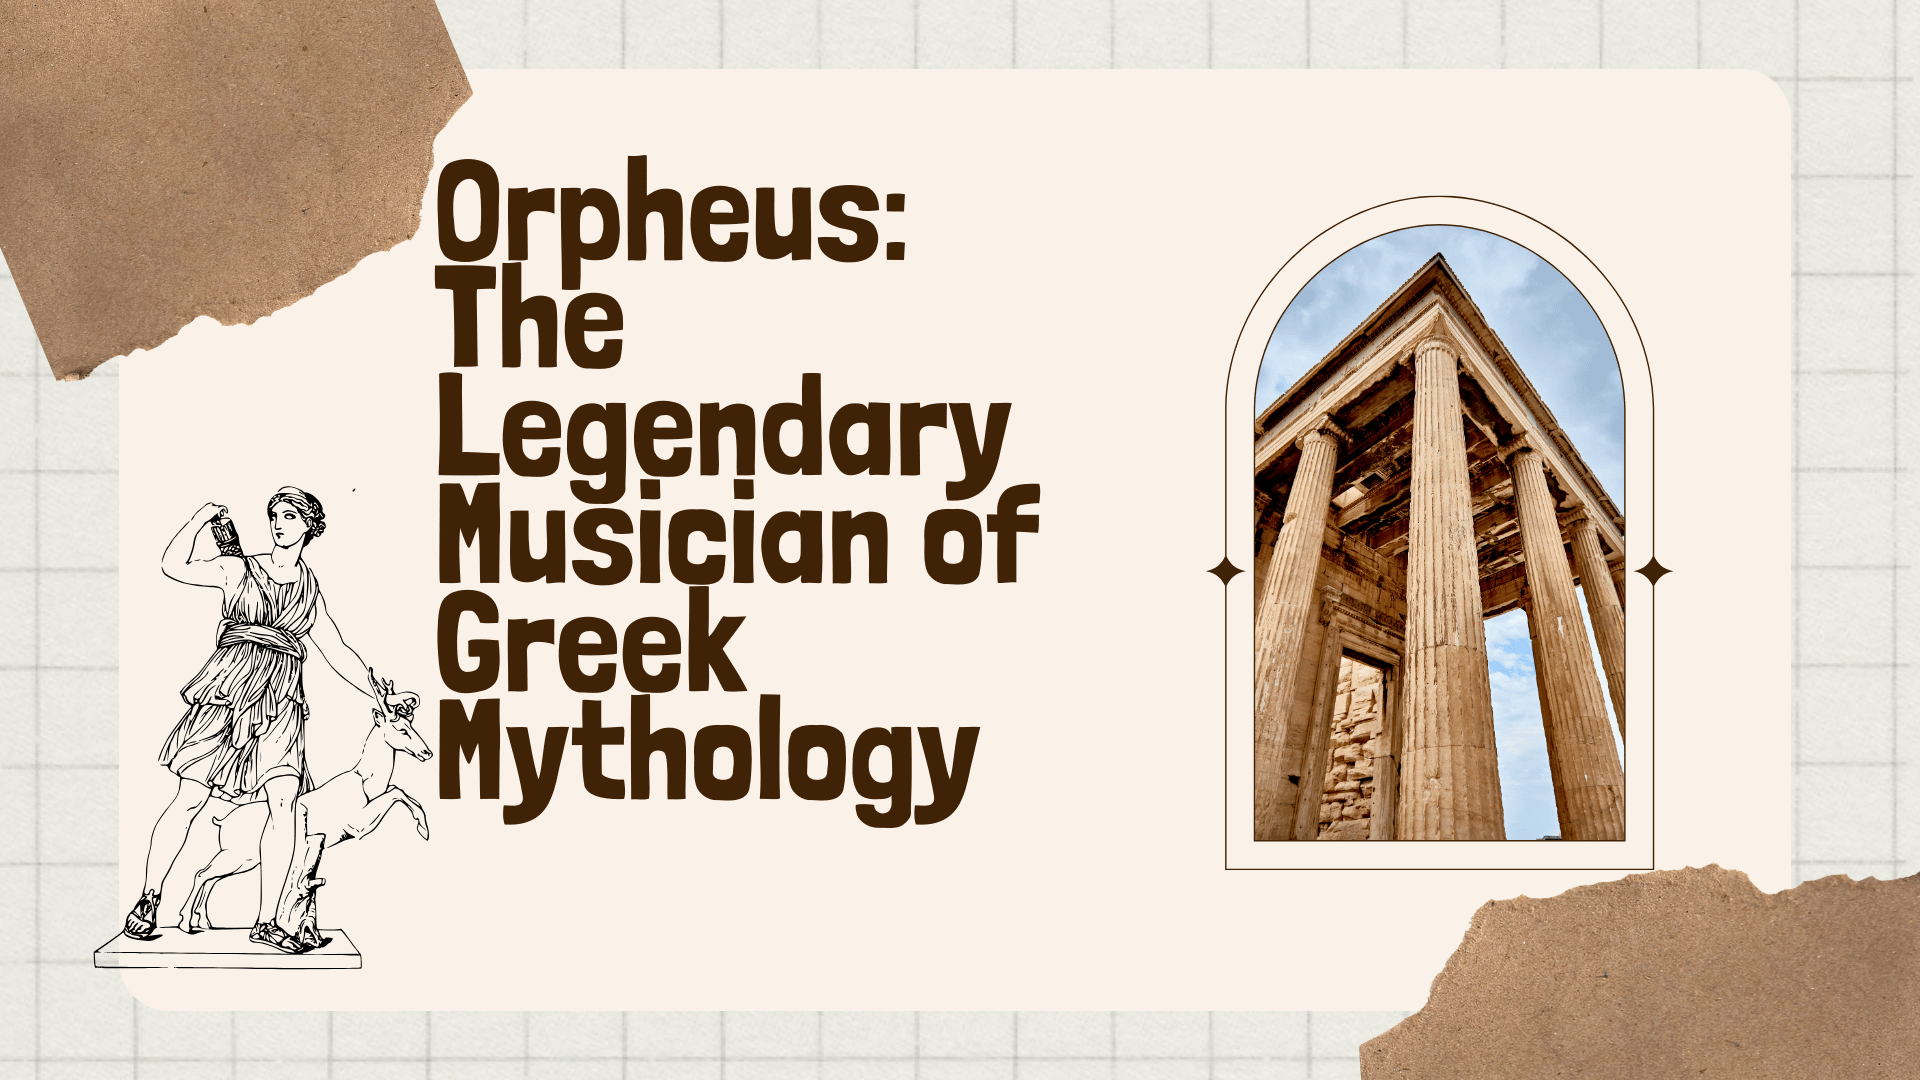 Orpheus: The Legendary Musician of Greek Mythology